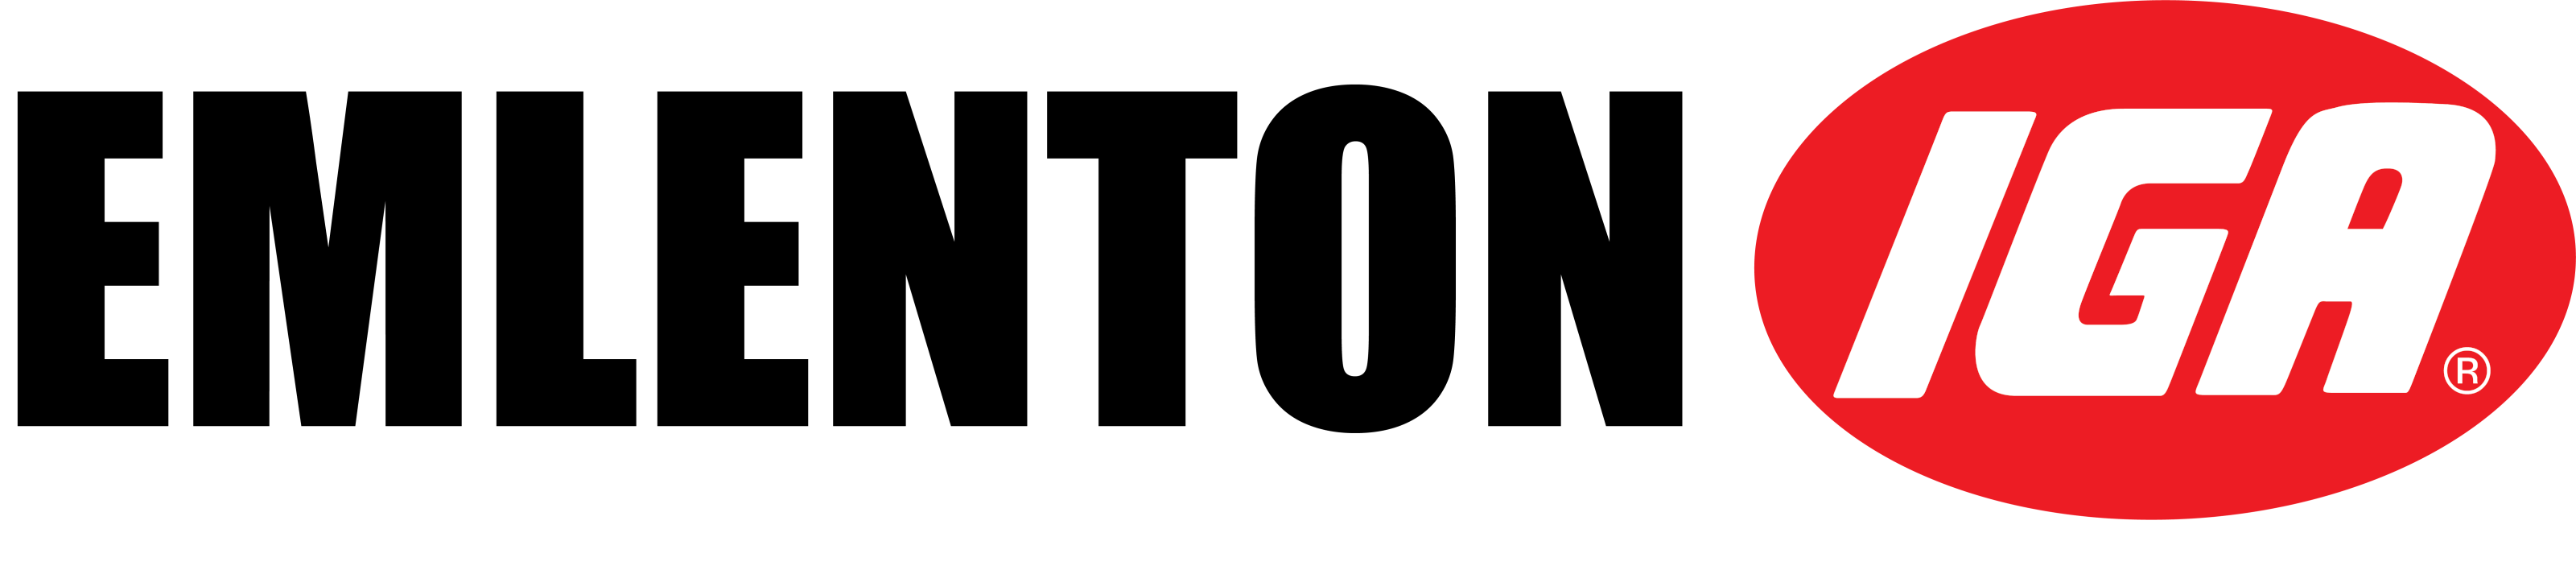 A theme logo of Emlenton IGA